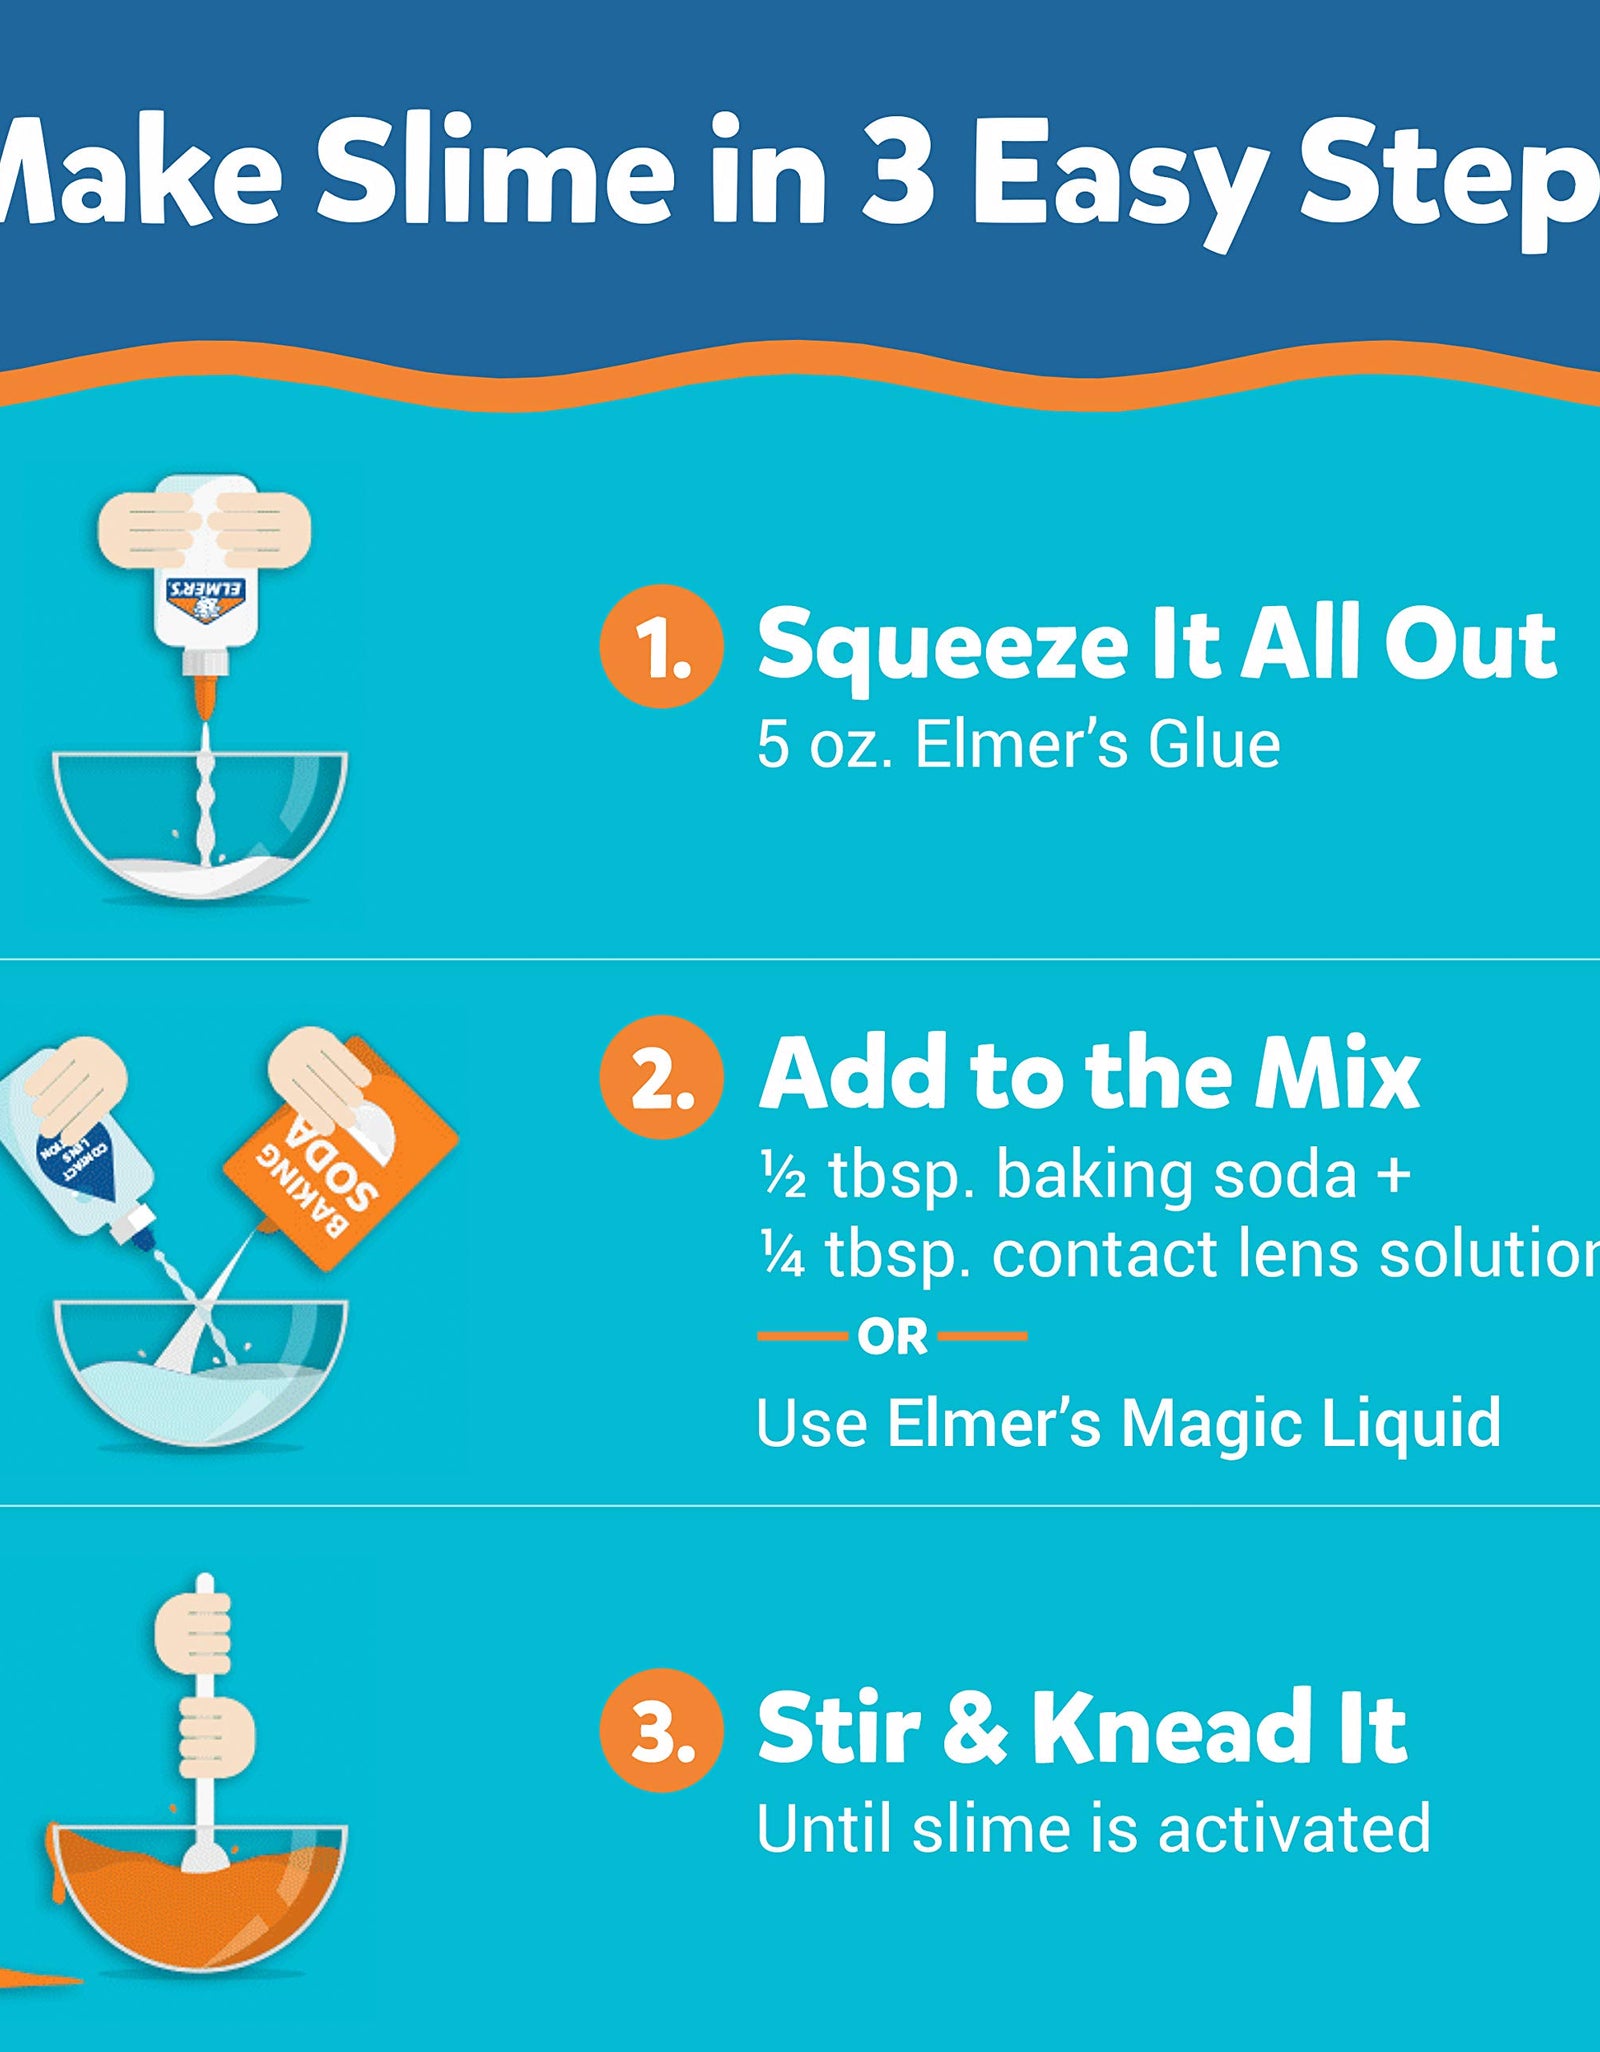 Elmer's Liquid School Glue, Washable, 1 Gallon, 2 Count - Great for Making Slime